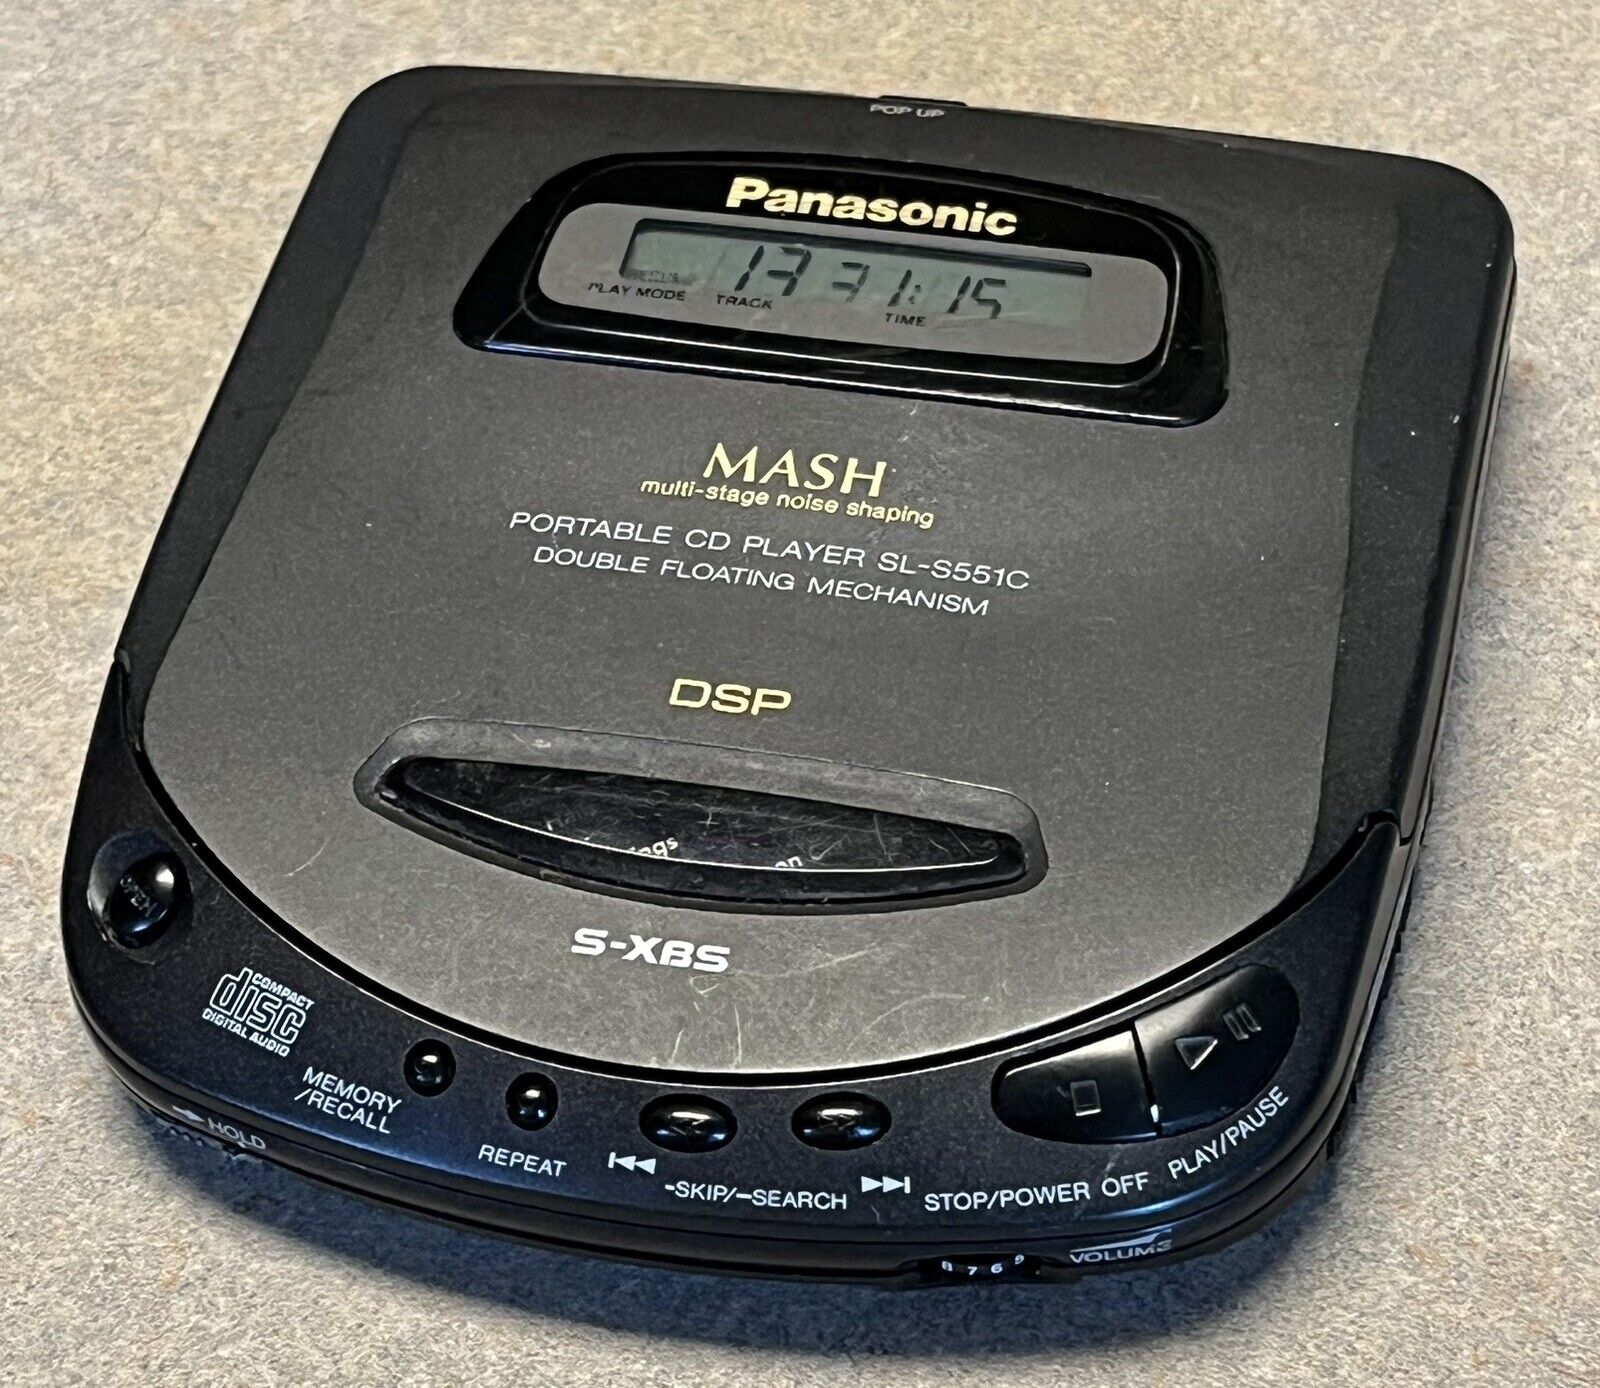 Panasonic Portable CD Player SL-S551C VTG 1993 Black DSP S-XBS MASH Tested Works